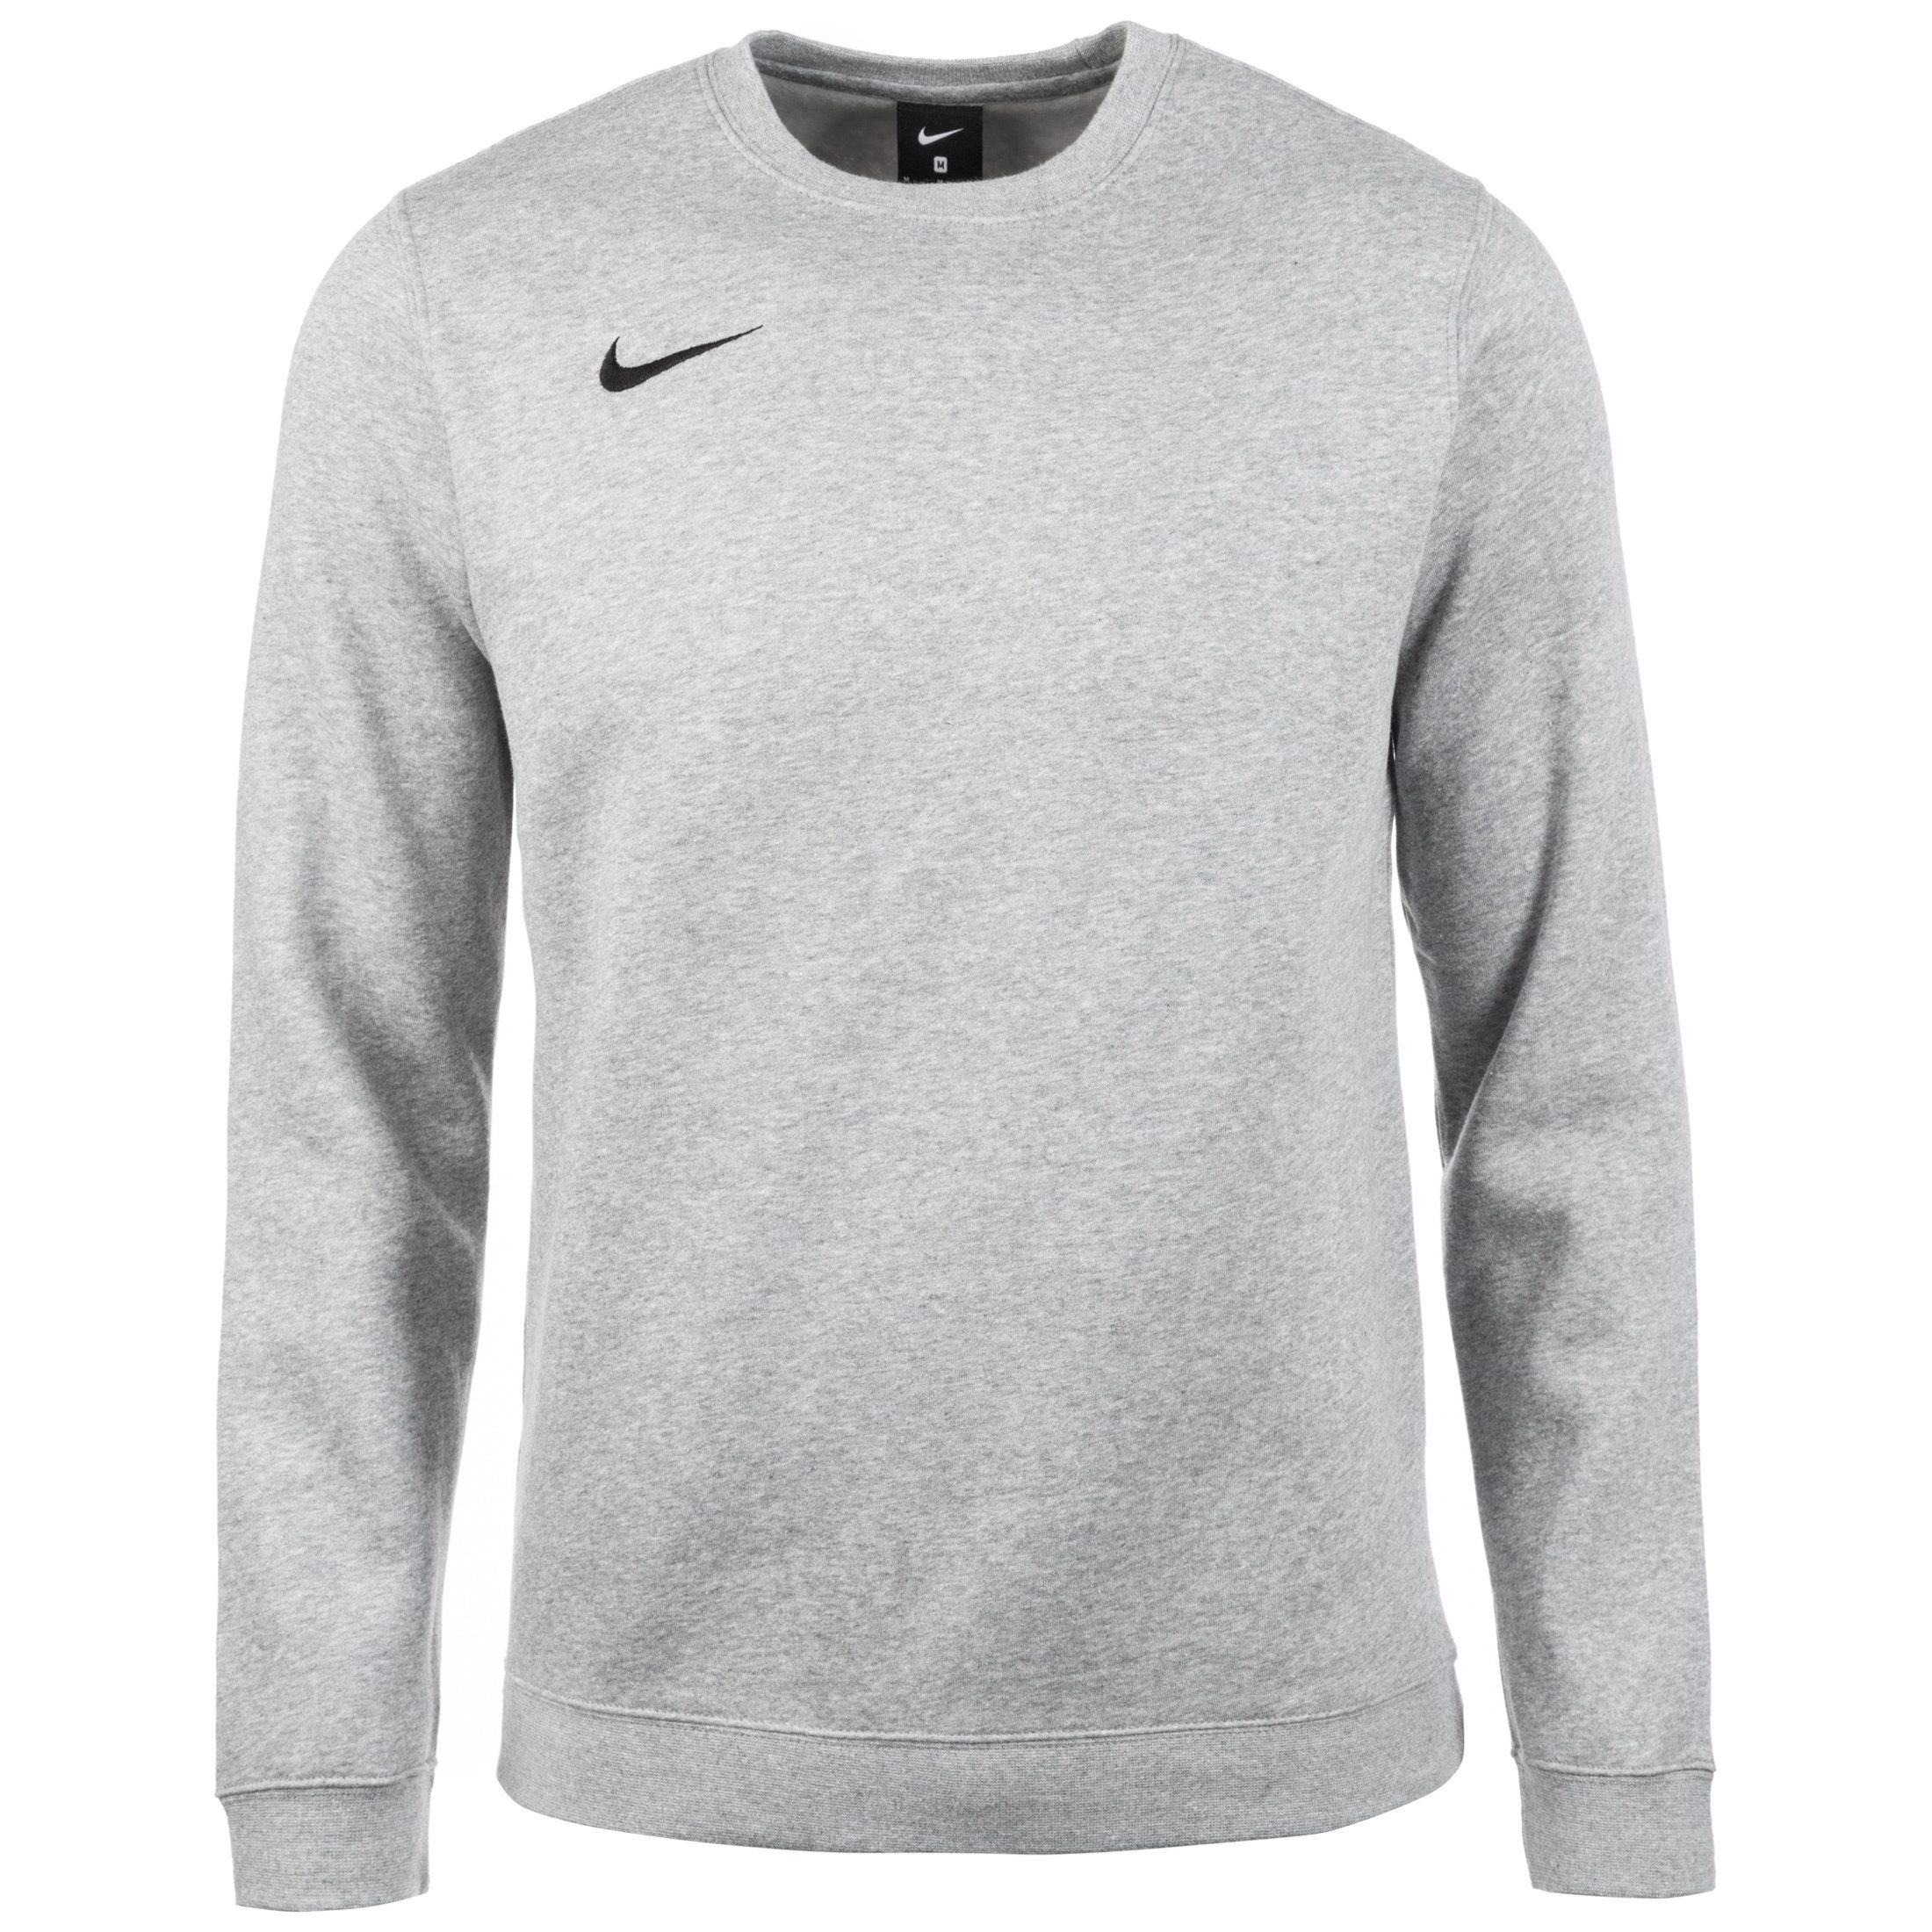 Nike Sweatshirt »Club19 Crew Fleece Tm«, Weiches French-Terry-Material  online kaufen | OTTO